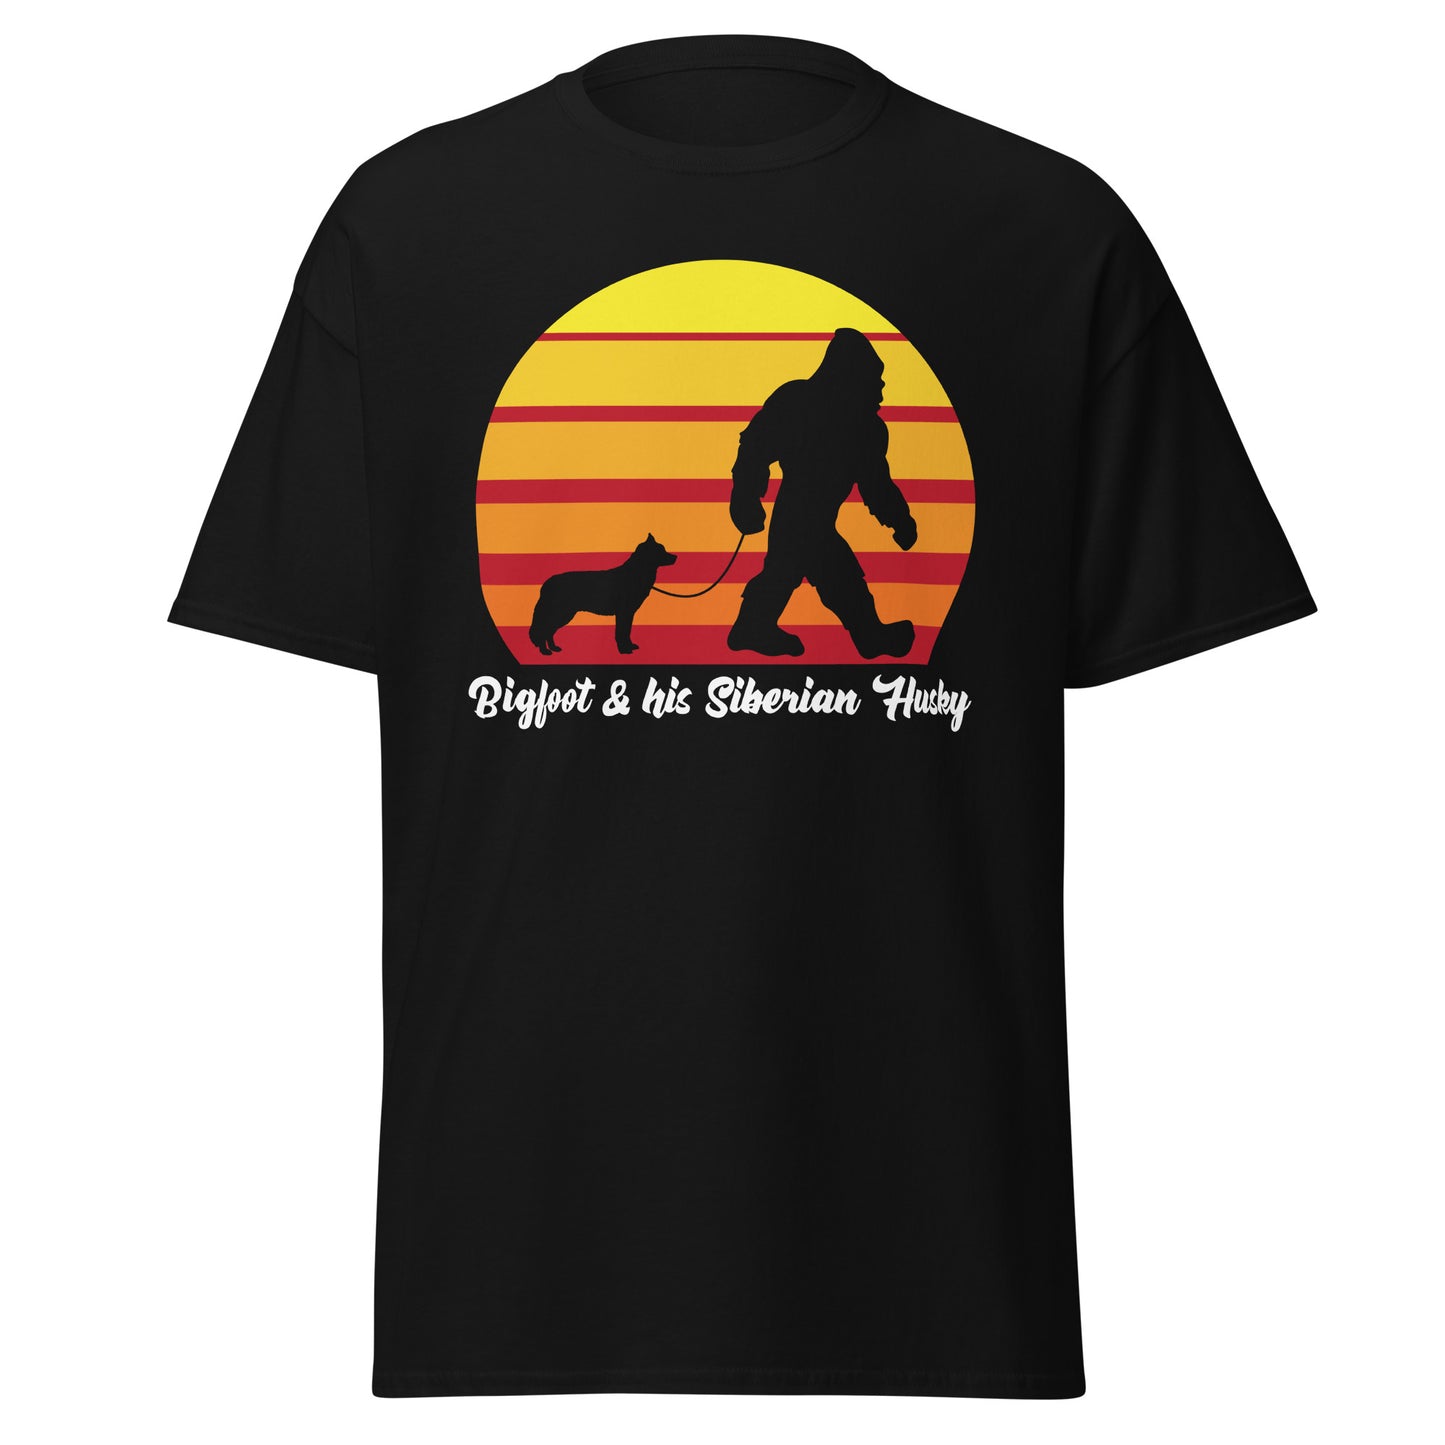 Bigfoot and his Siberian Husky men’s black t-shirt by Dog Artistry.